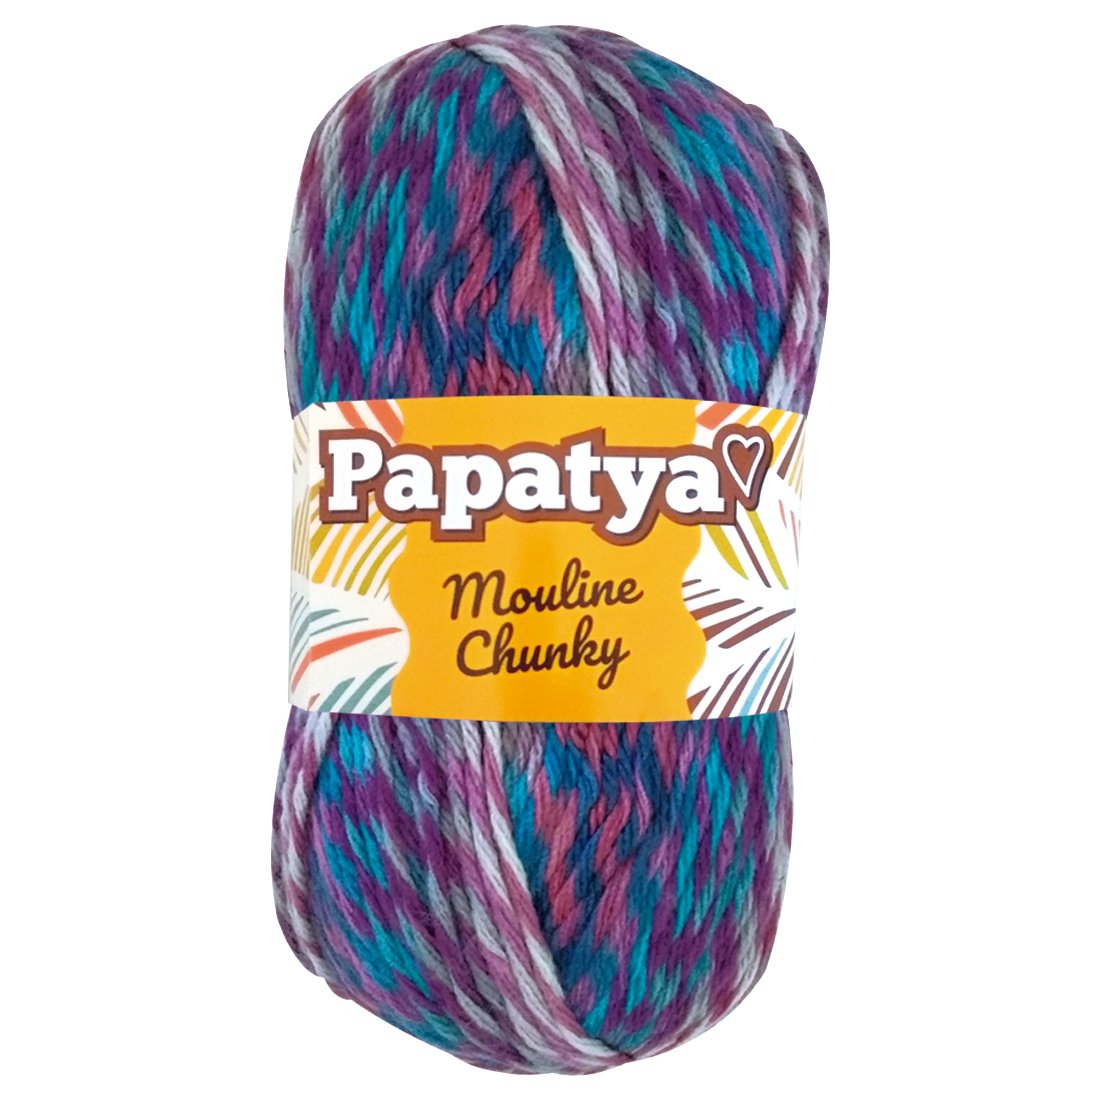 Estambre Papatya Mouline Chunky, Marca Sweet Crochet, MADEJA de 100g con 160m